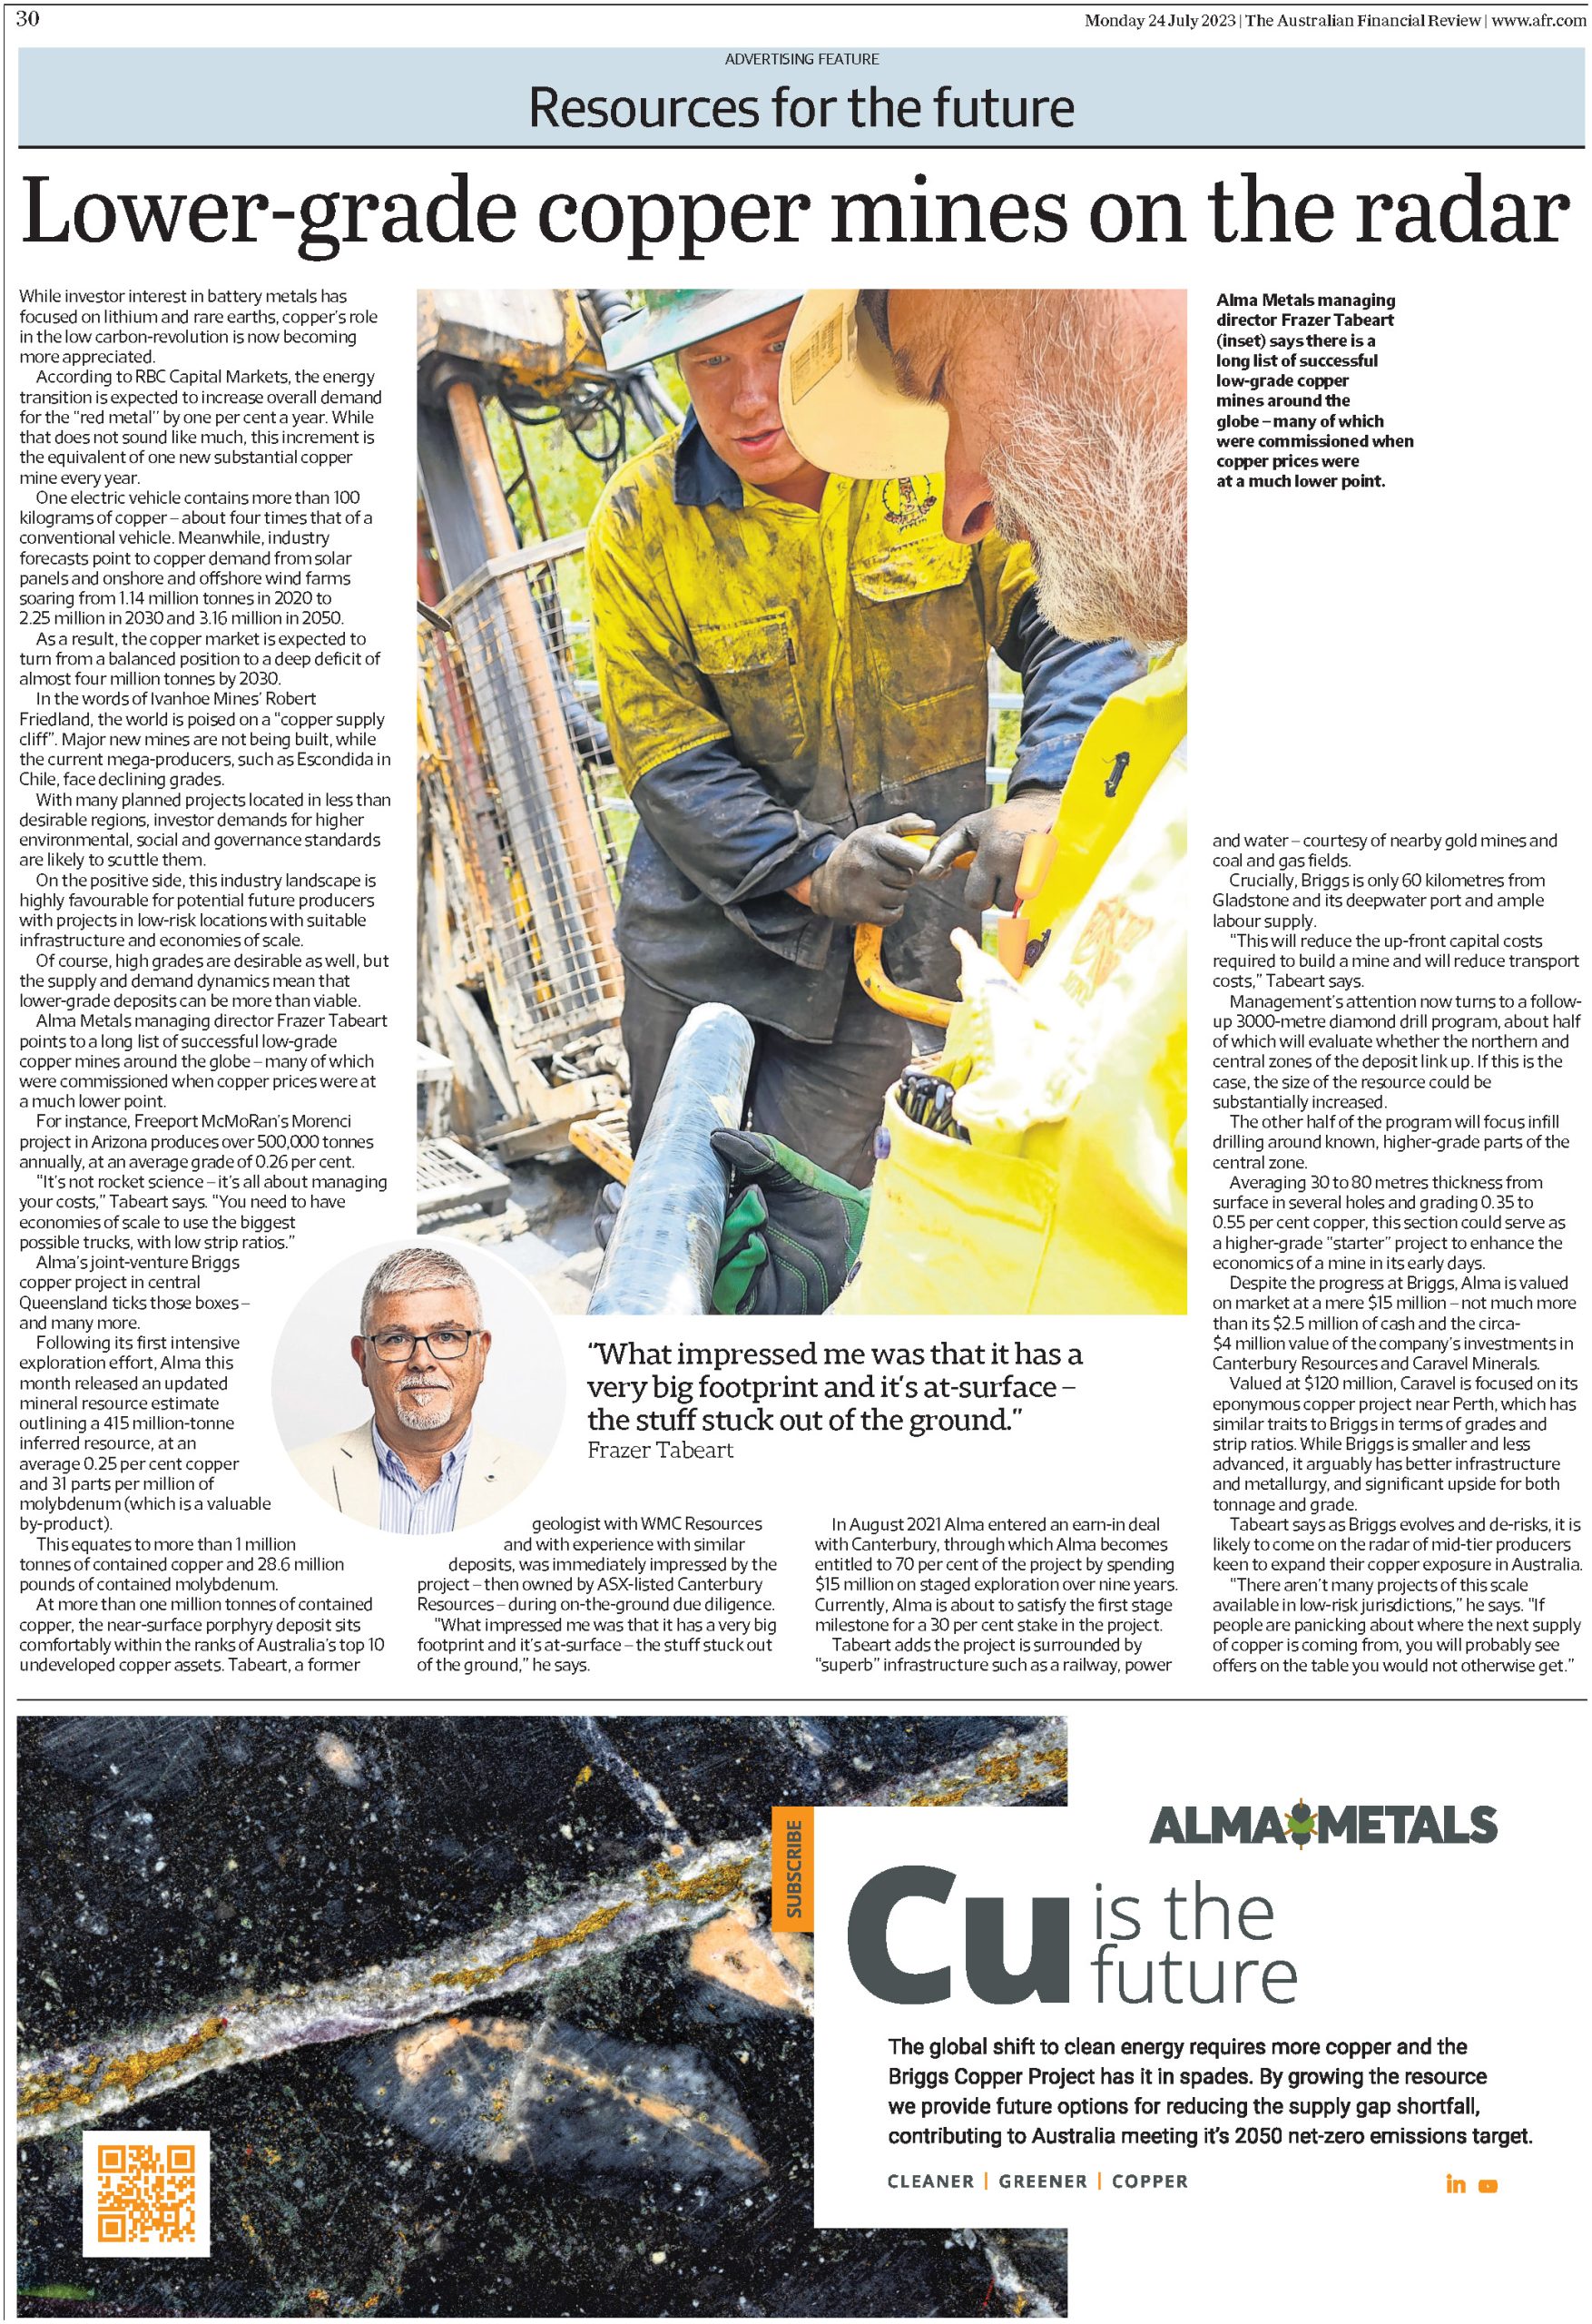 Alma Metals ALM The Australian Financial Review Copper Mines